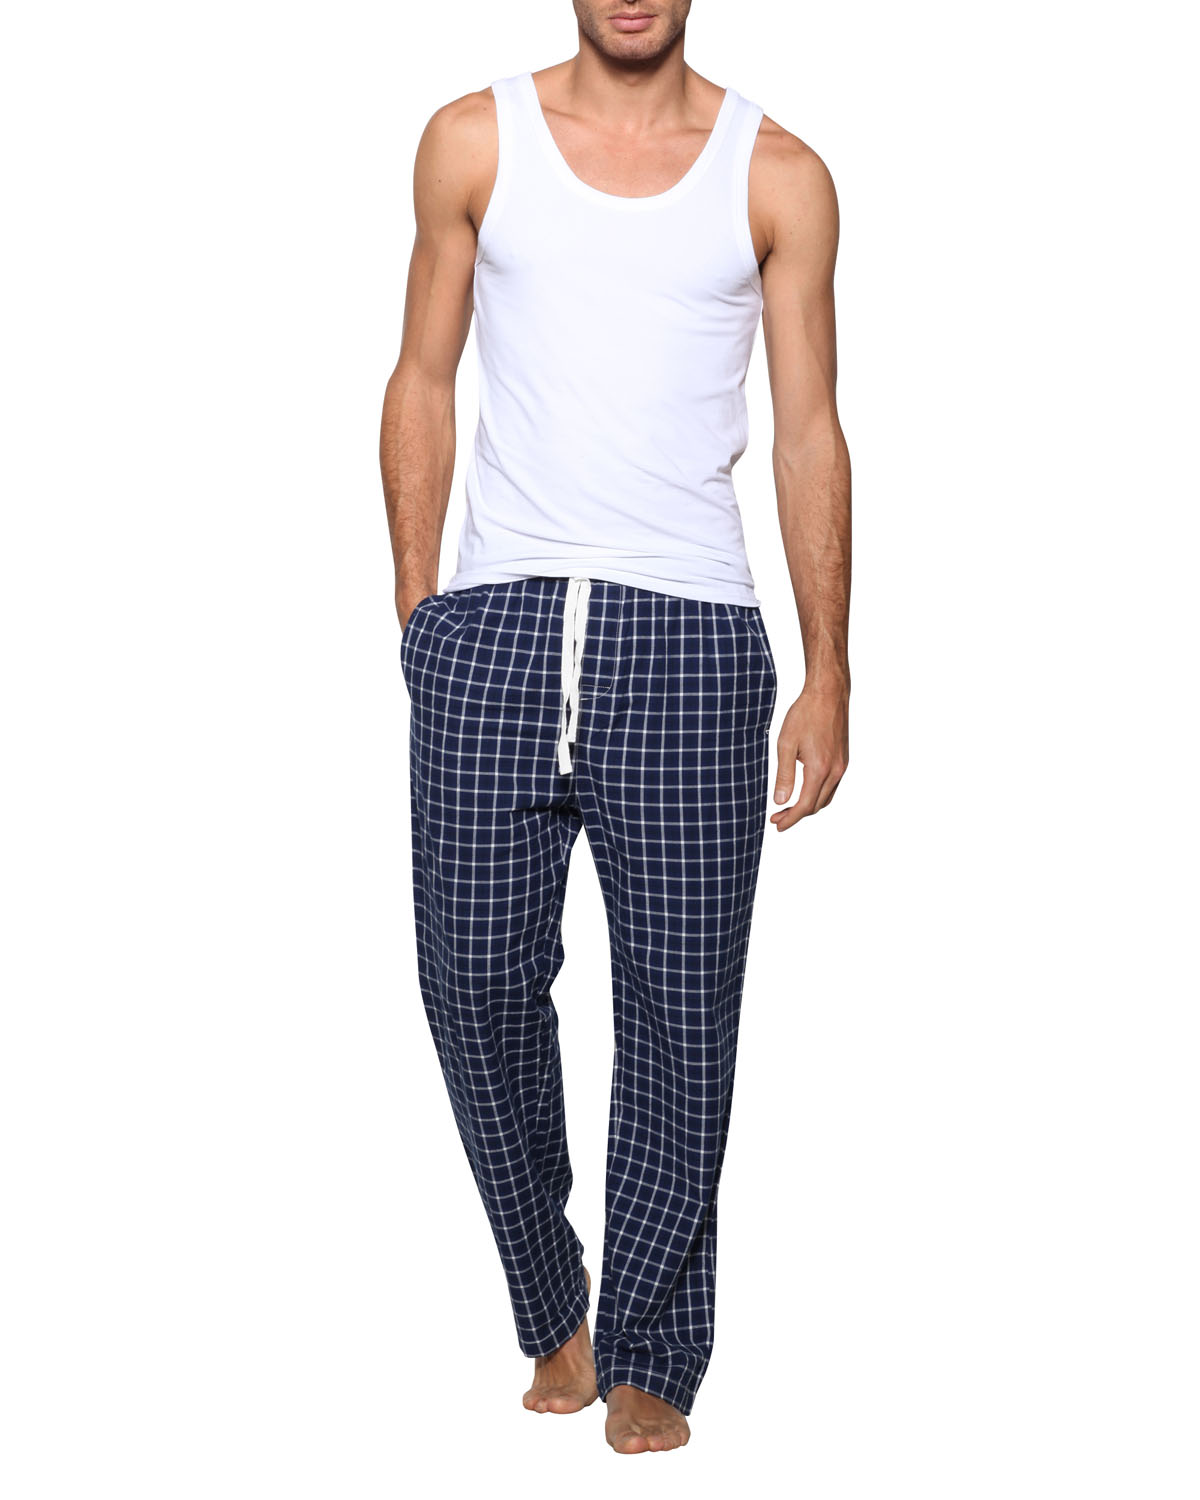 Essentials Pantalon de Pyjama tiss/é Homme